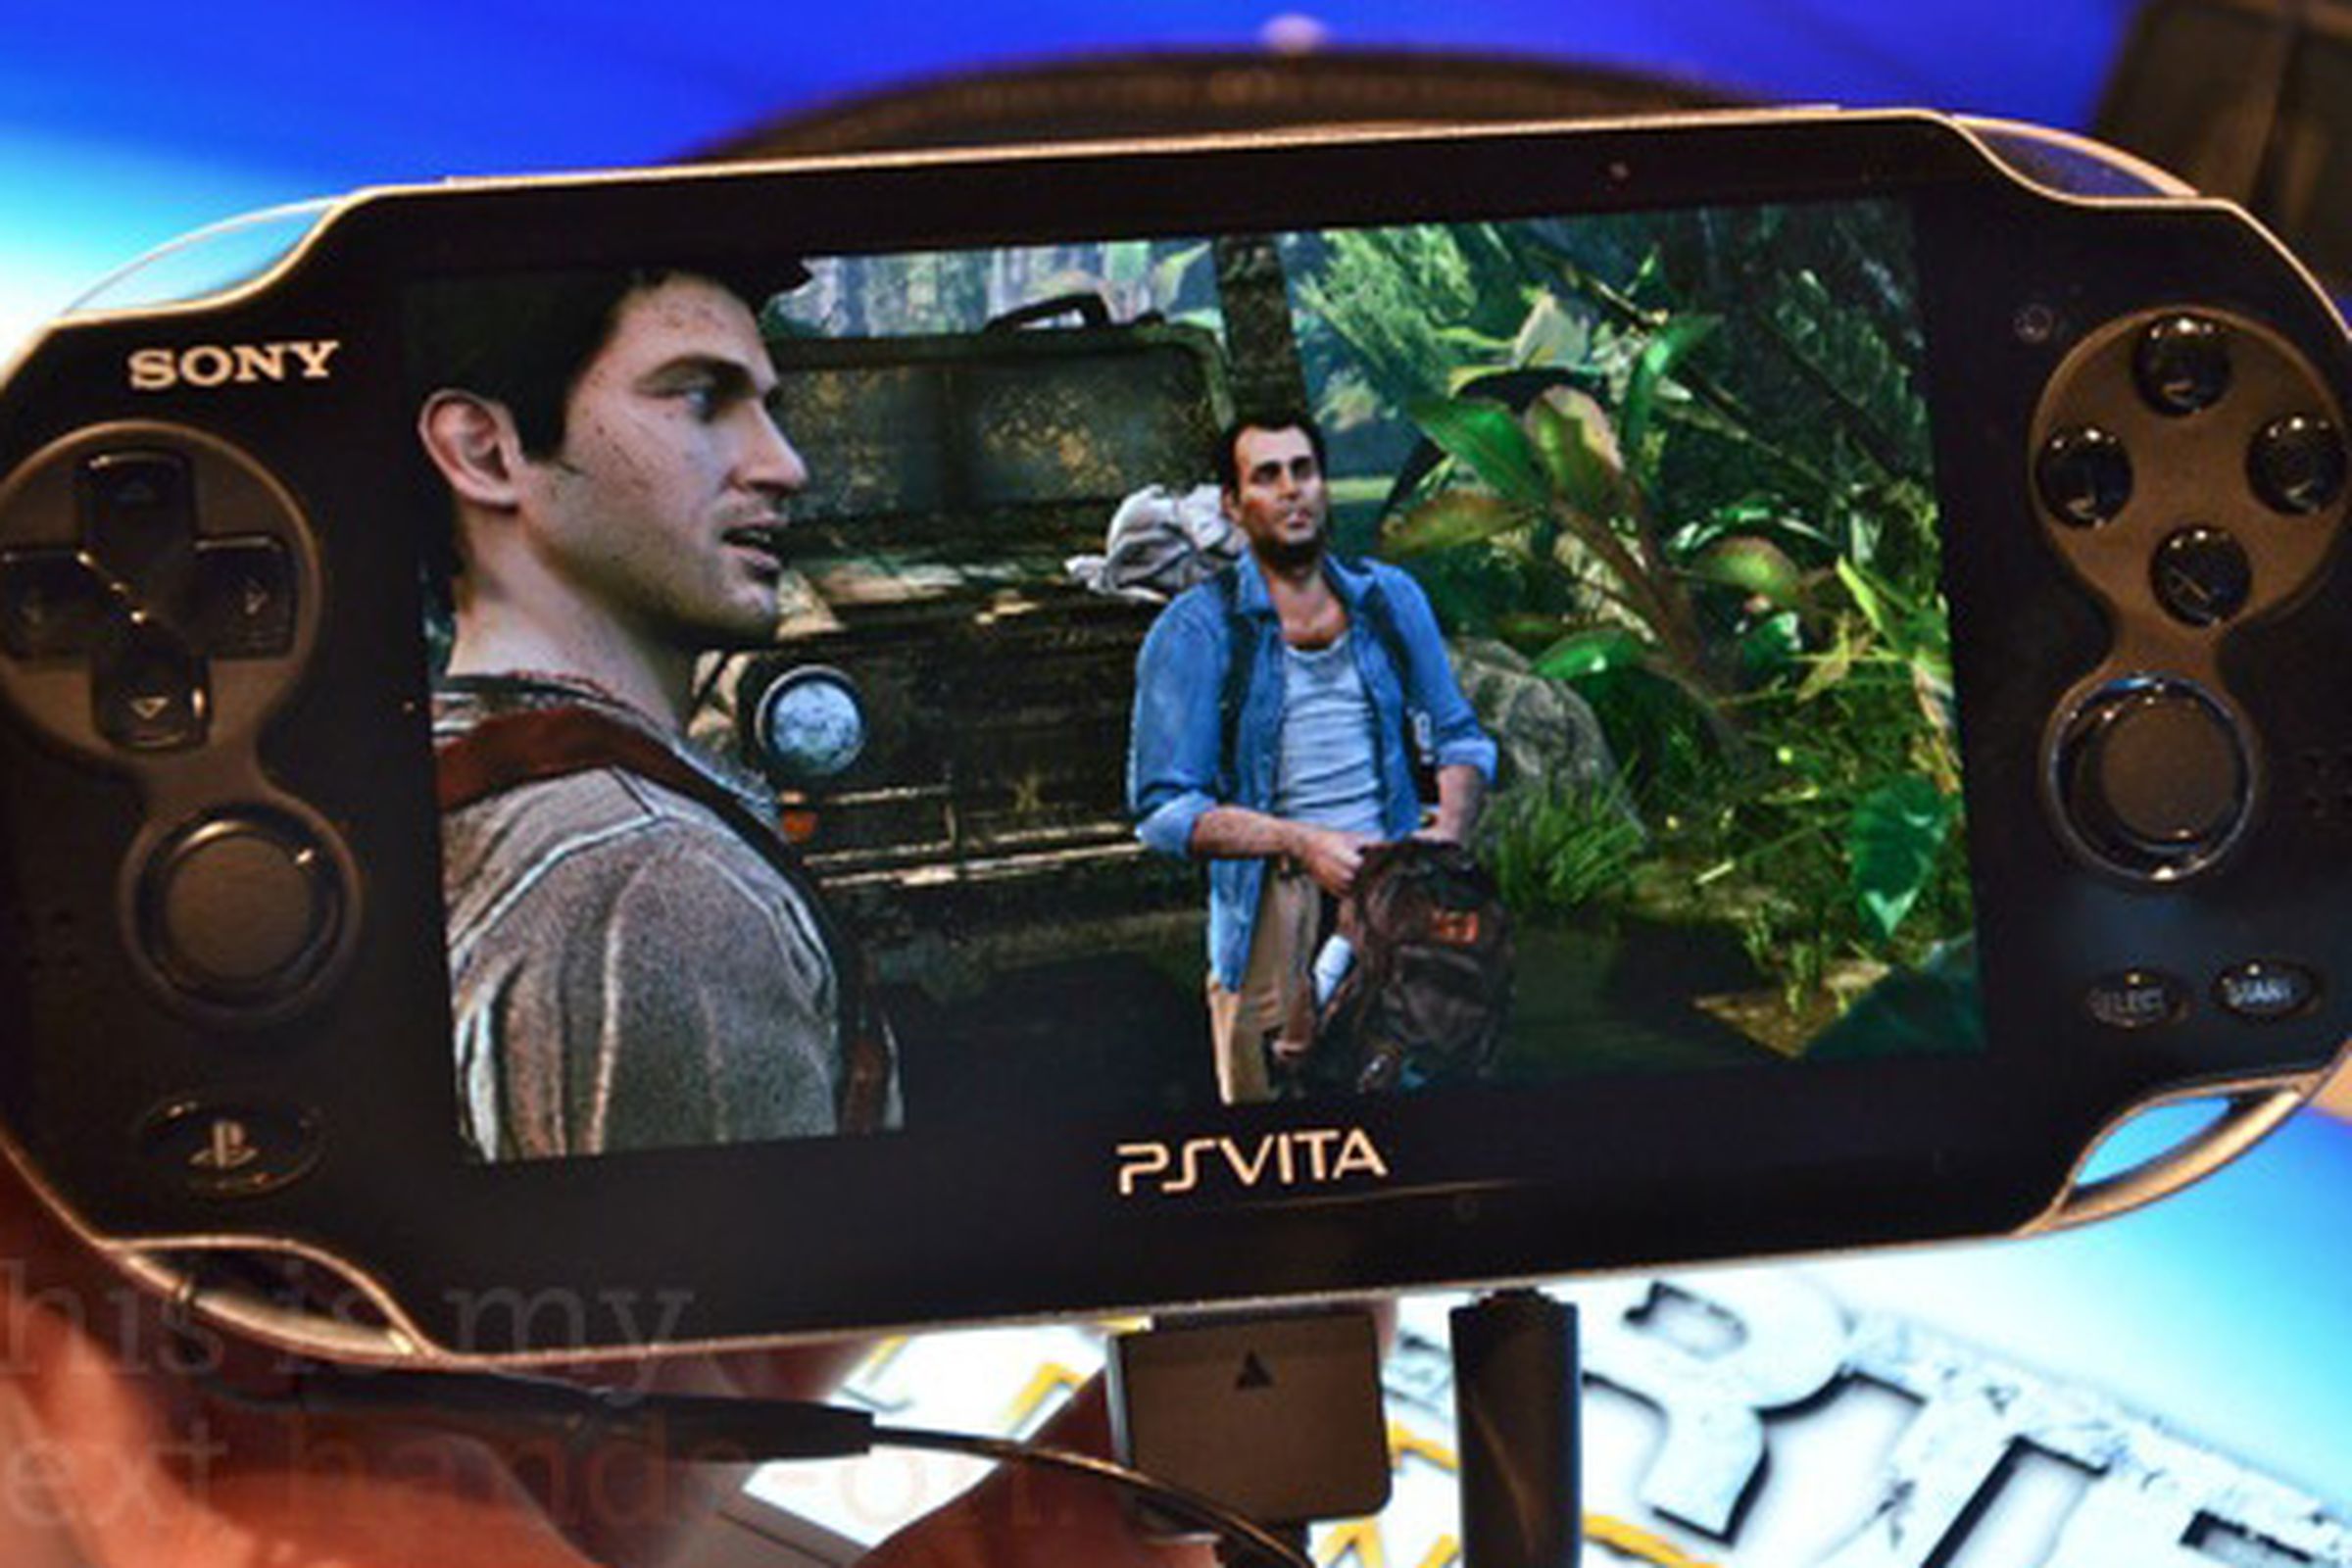 PlayStation Vita E3 2011 hands-on